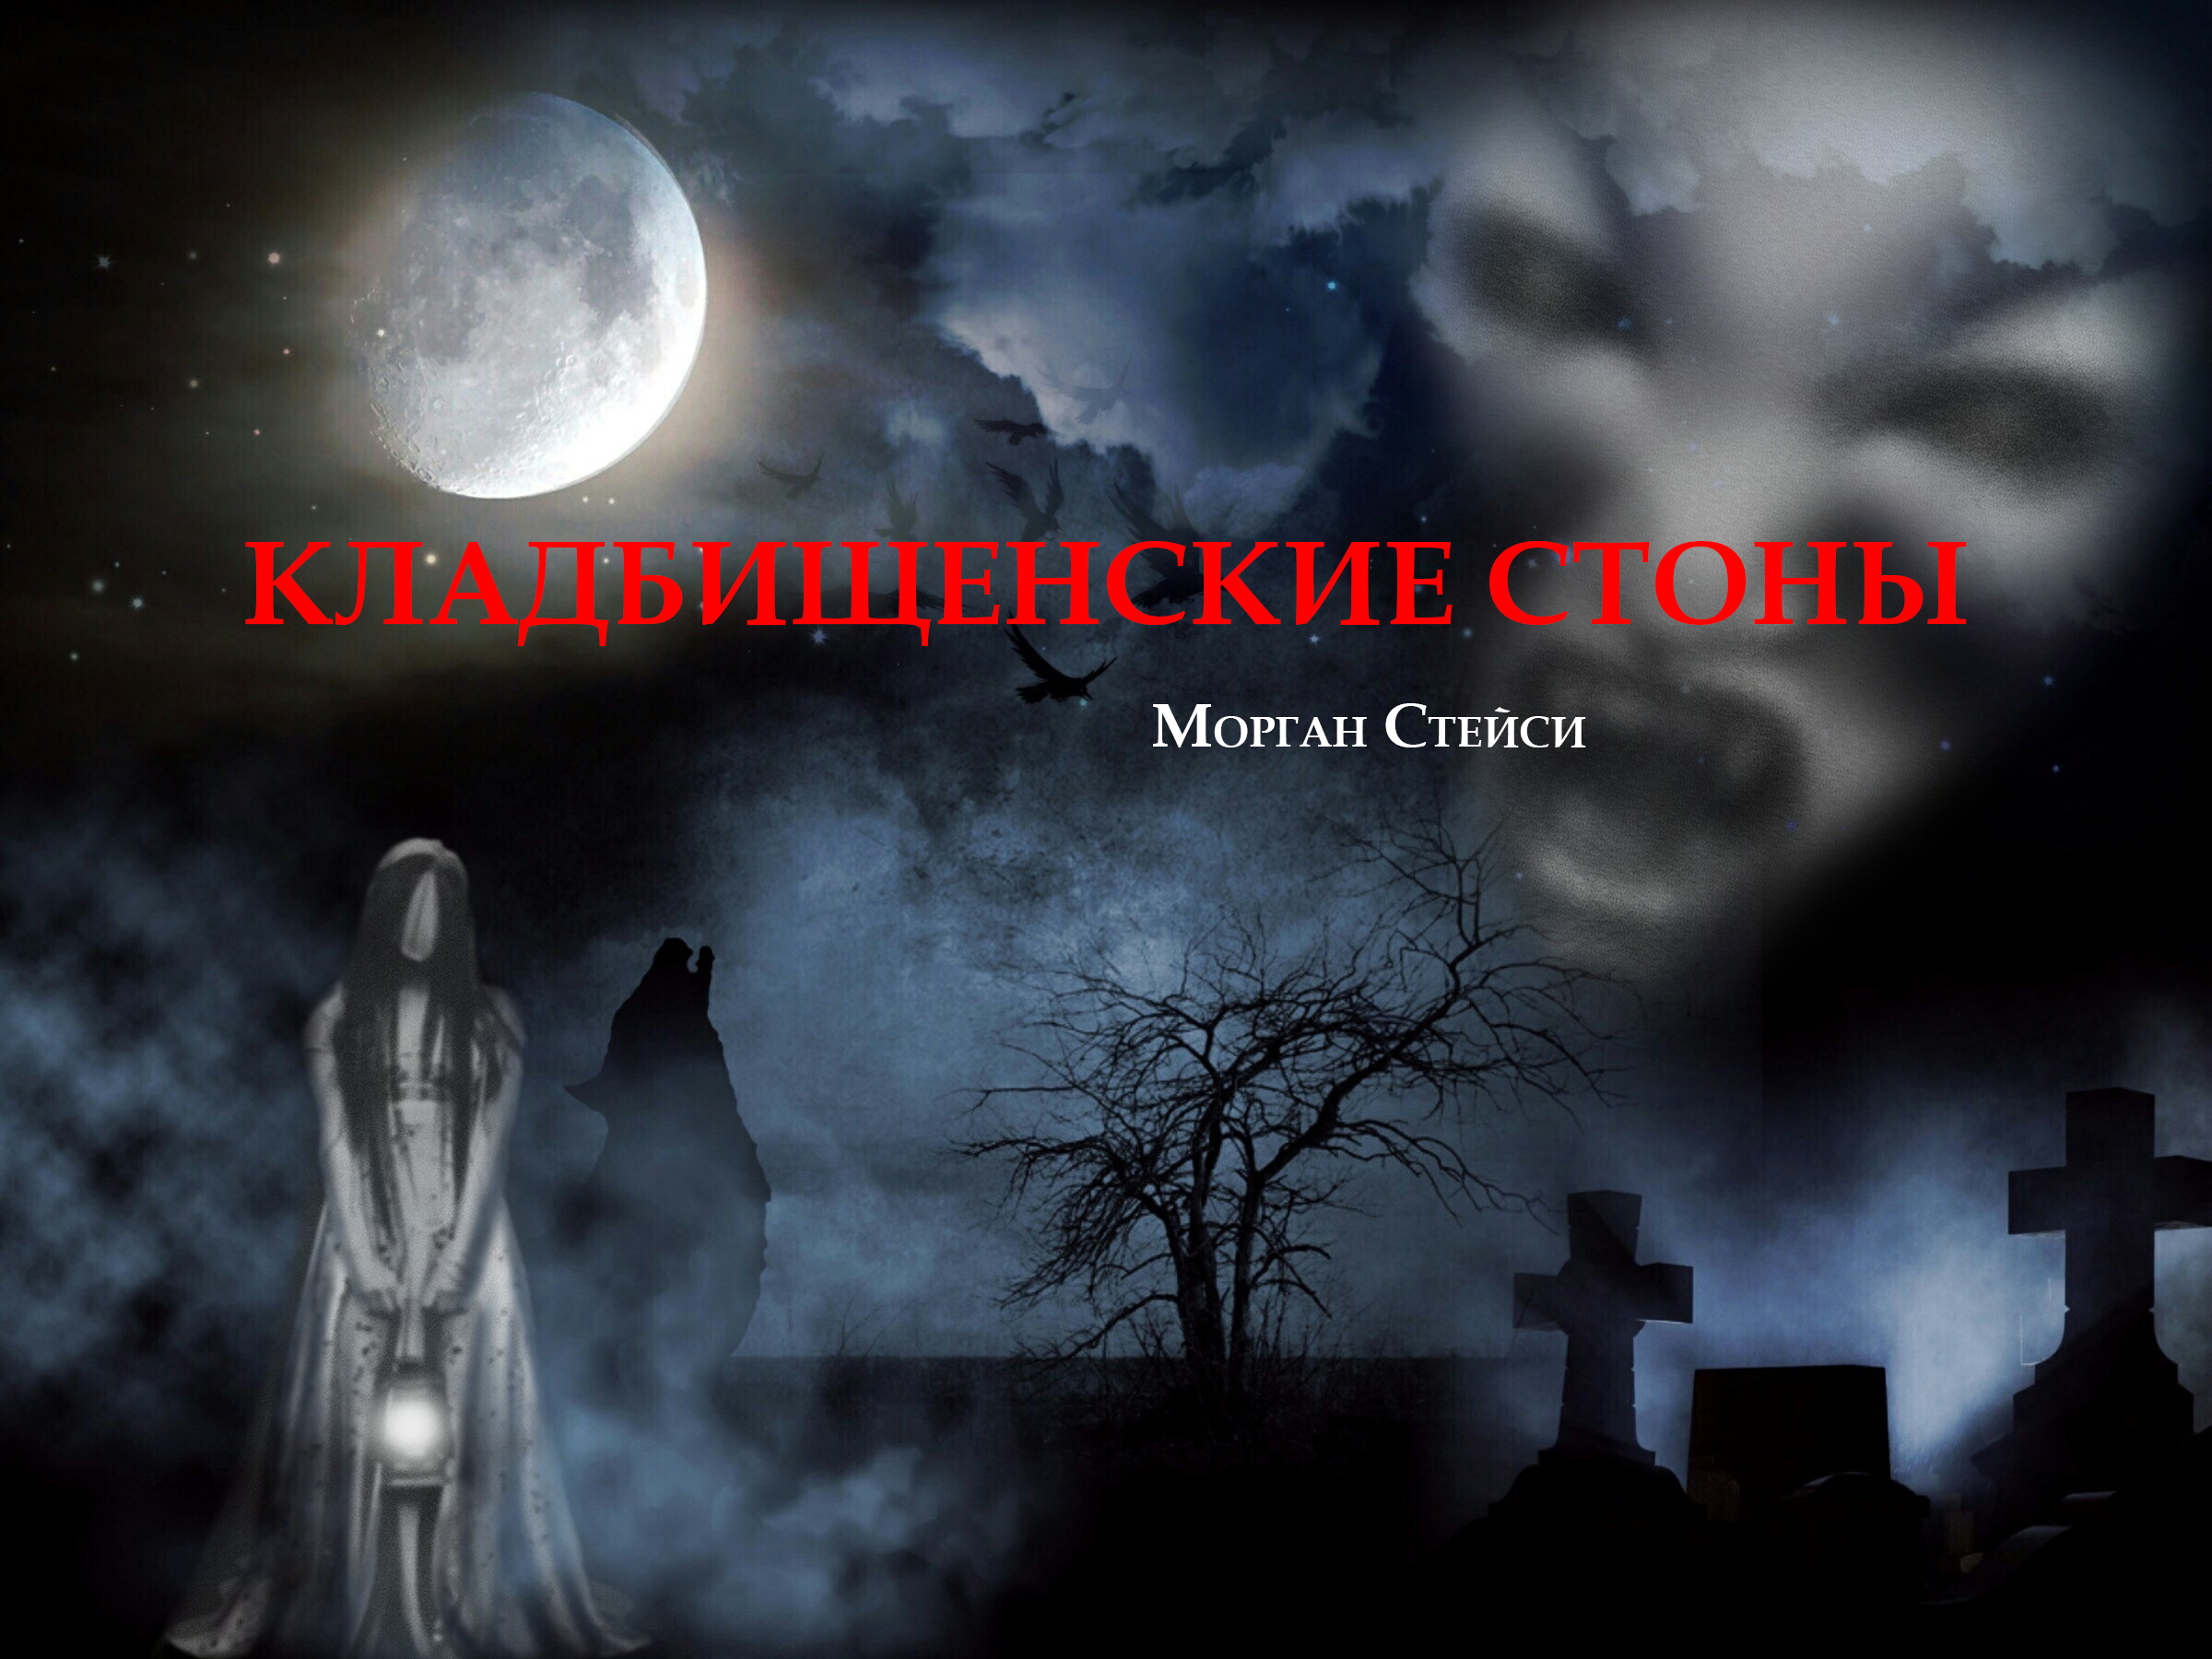 Кладбищенский призрак Мэри